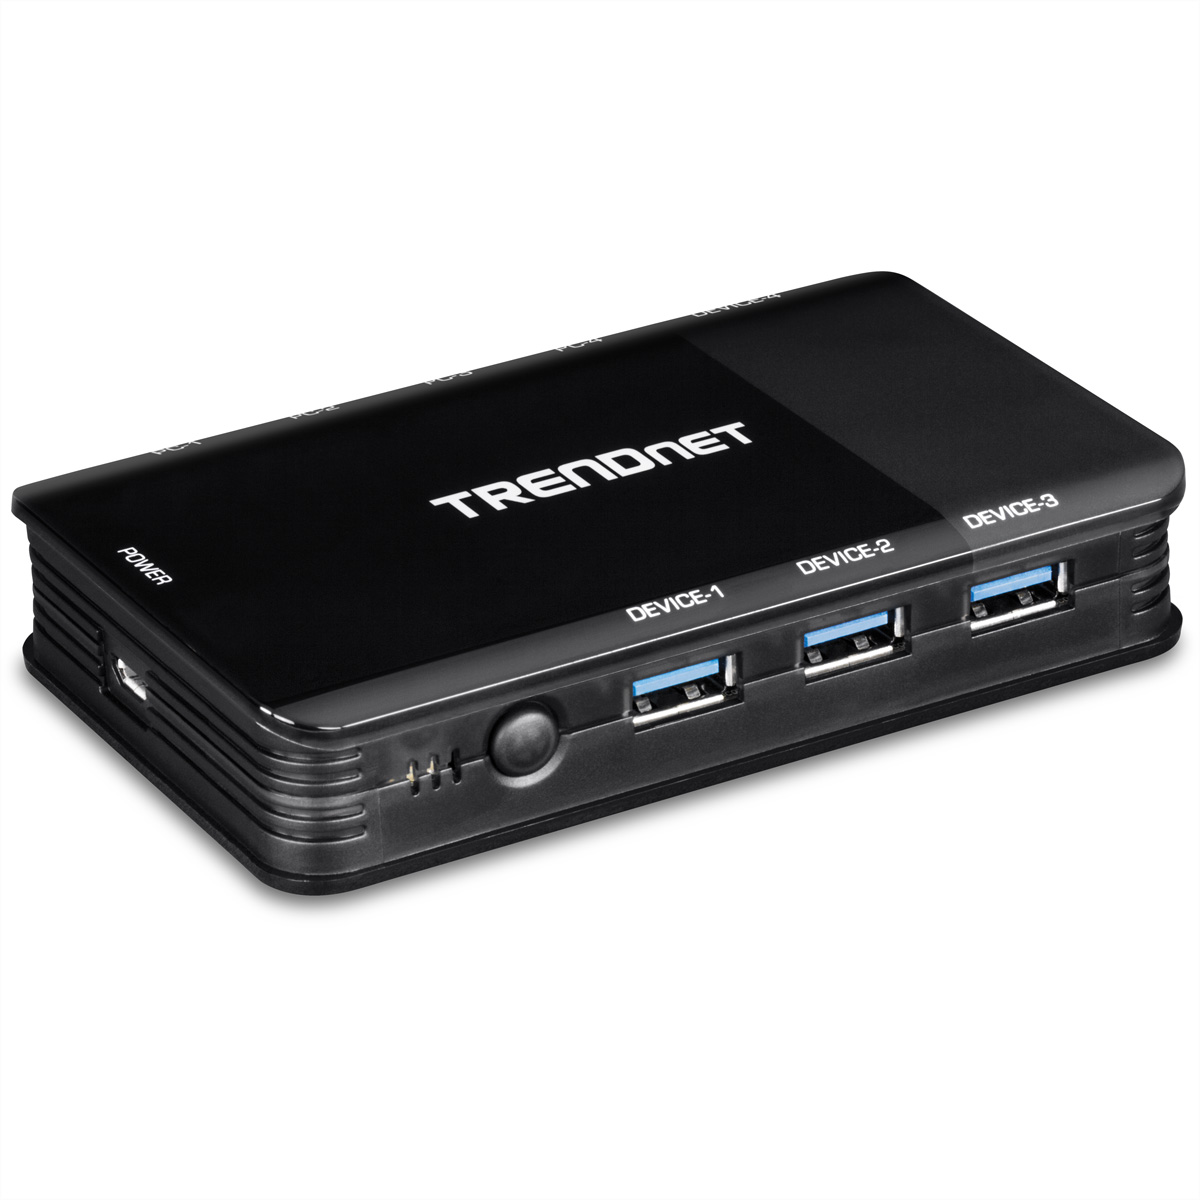 TK-U404 PC-Share 4 User TRENDNET Switch 4-Port PC/1 Sharing 3.1 USB